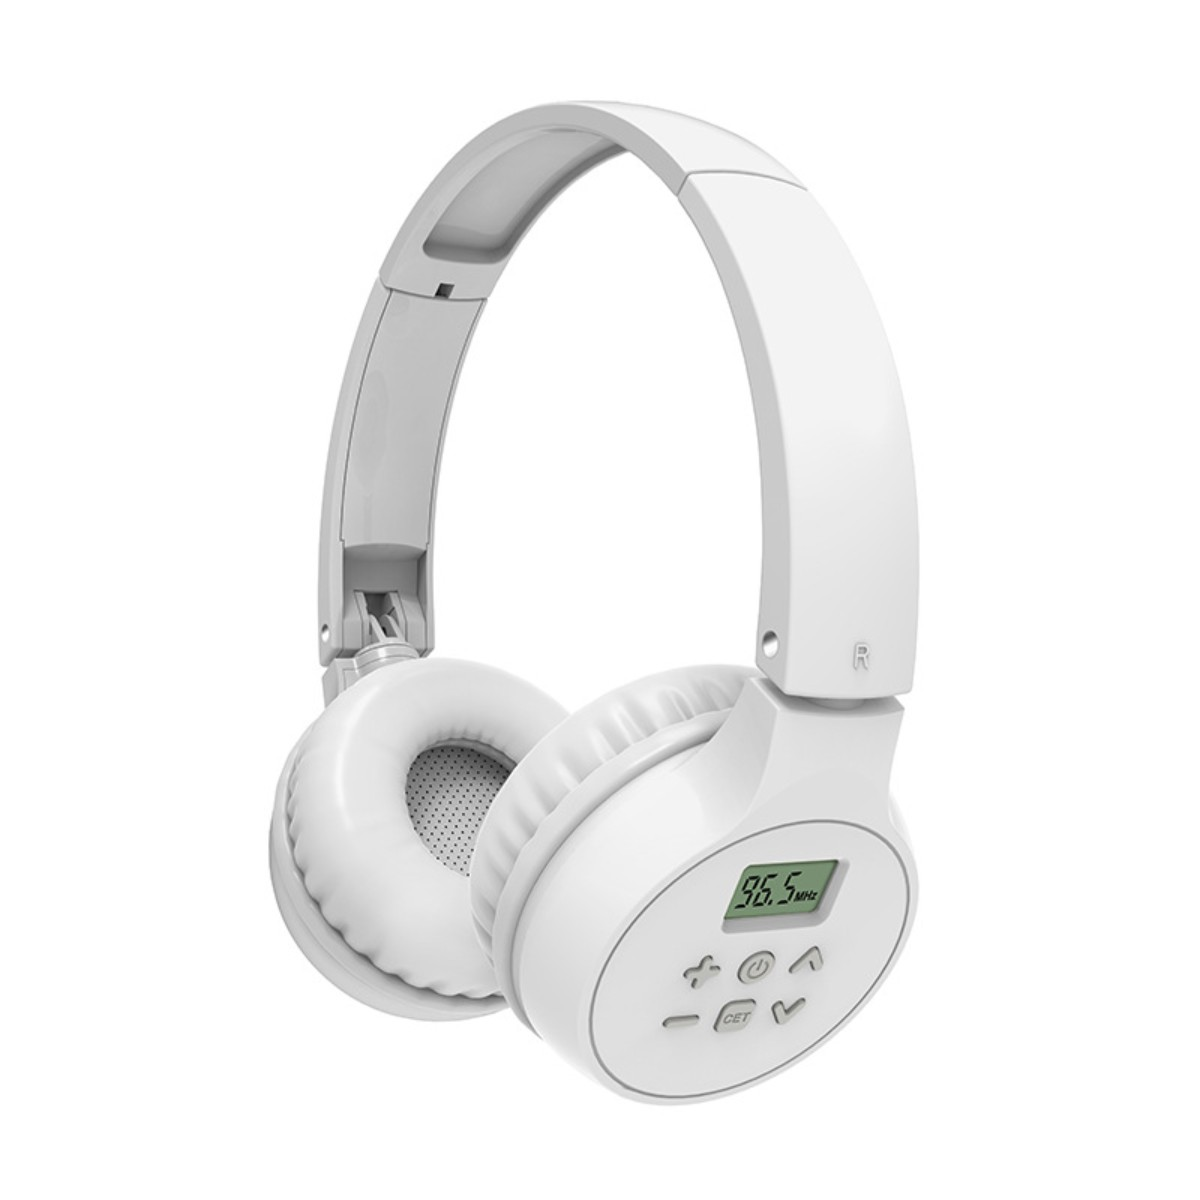 Kopfhörer Kopfhörer Weiß 4 FM Kopfhörer, Weiß ENBAOXIN Over-ear Hören Kopfhörer Englisch Klasse Wireless 4-6